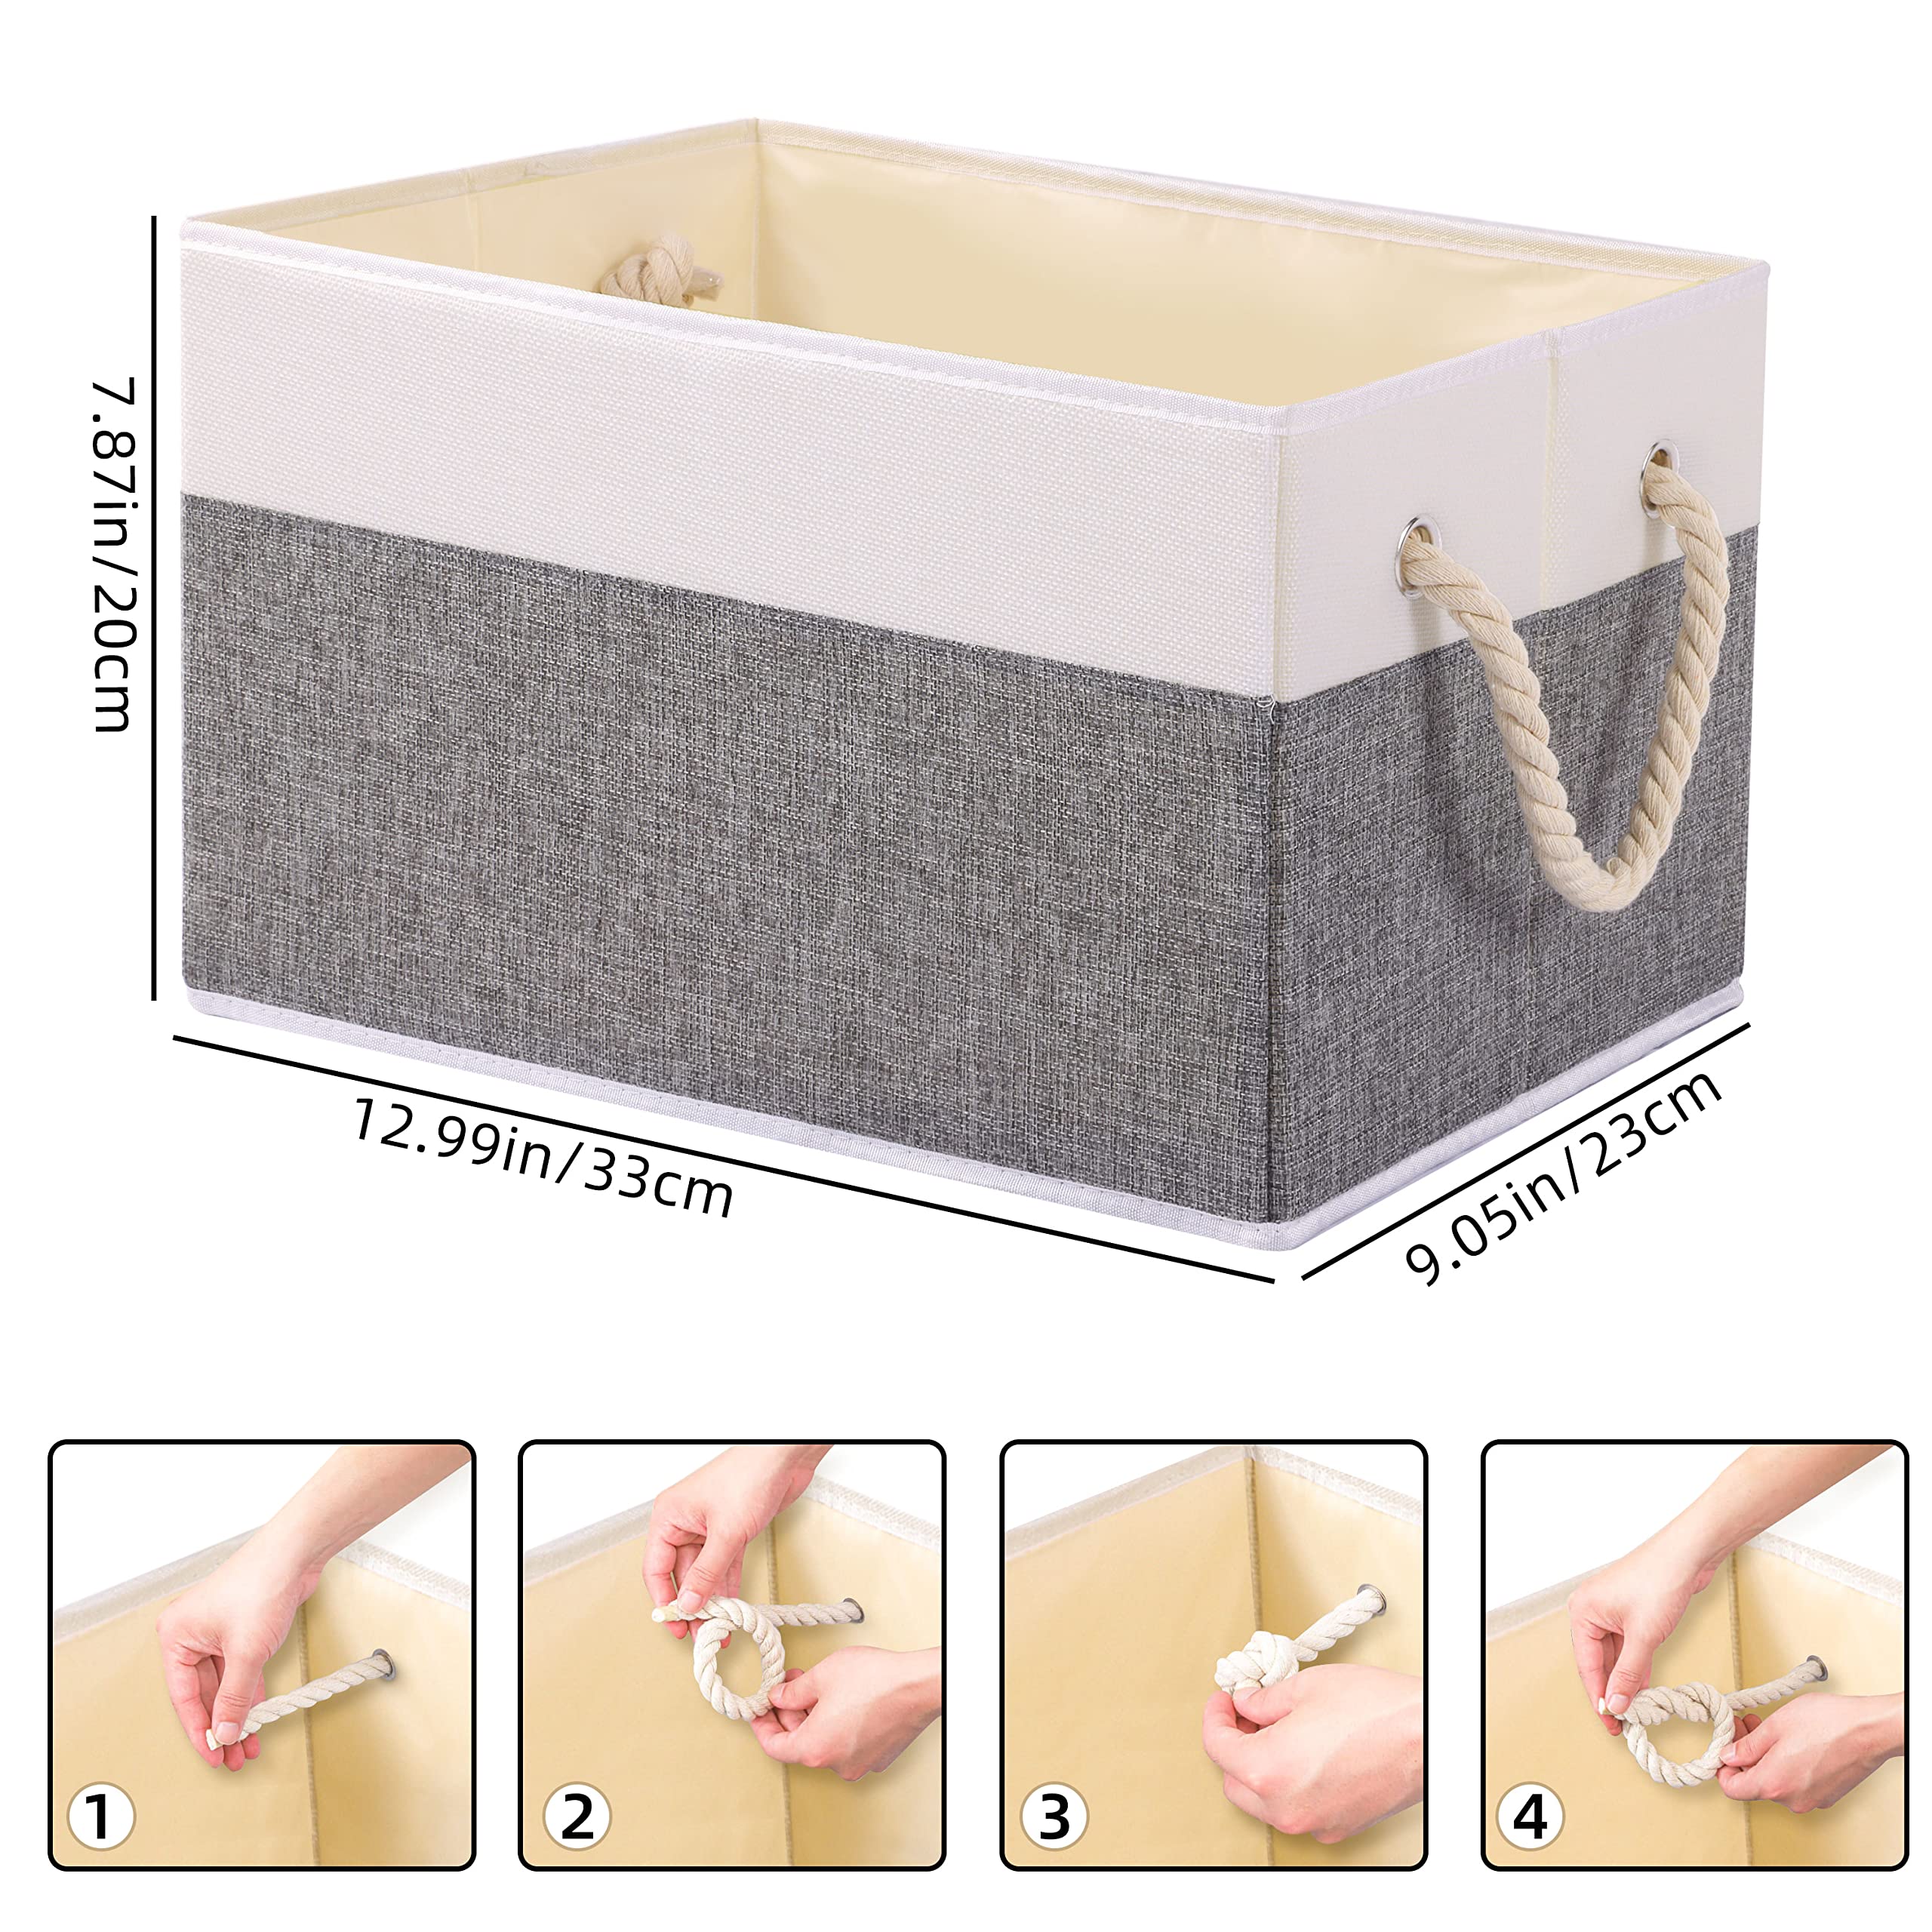 Yawinhe Foldable Storage Basket 1-Pack, Large Fabric Storage Bins with Rope Handle, Used for Organizing Shelves, Closets, Clothes Storage Box, 12.99''Lx9.05''Wx7.87''H, White/Grey